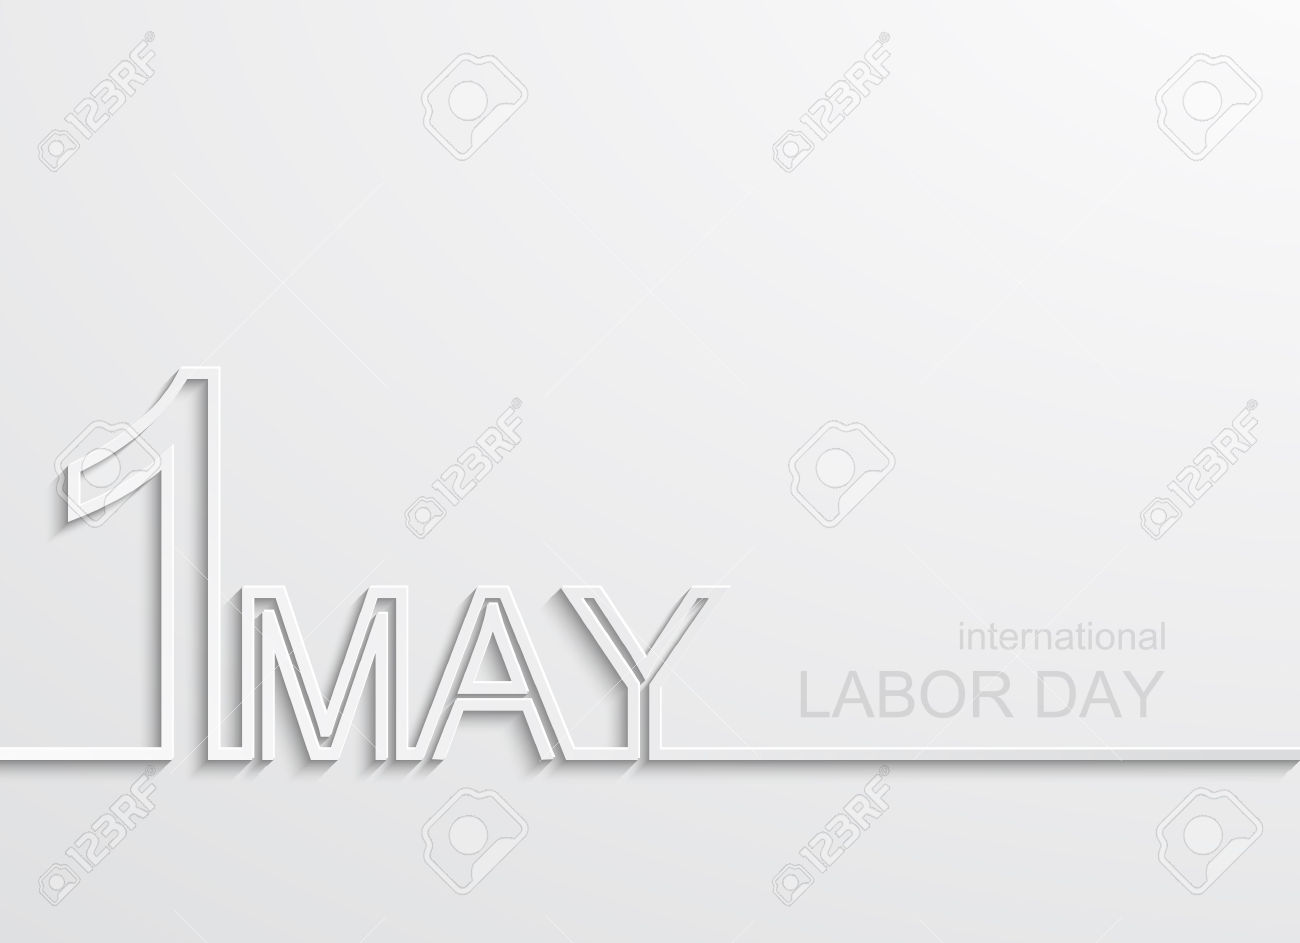 1 May International Labor Day